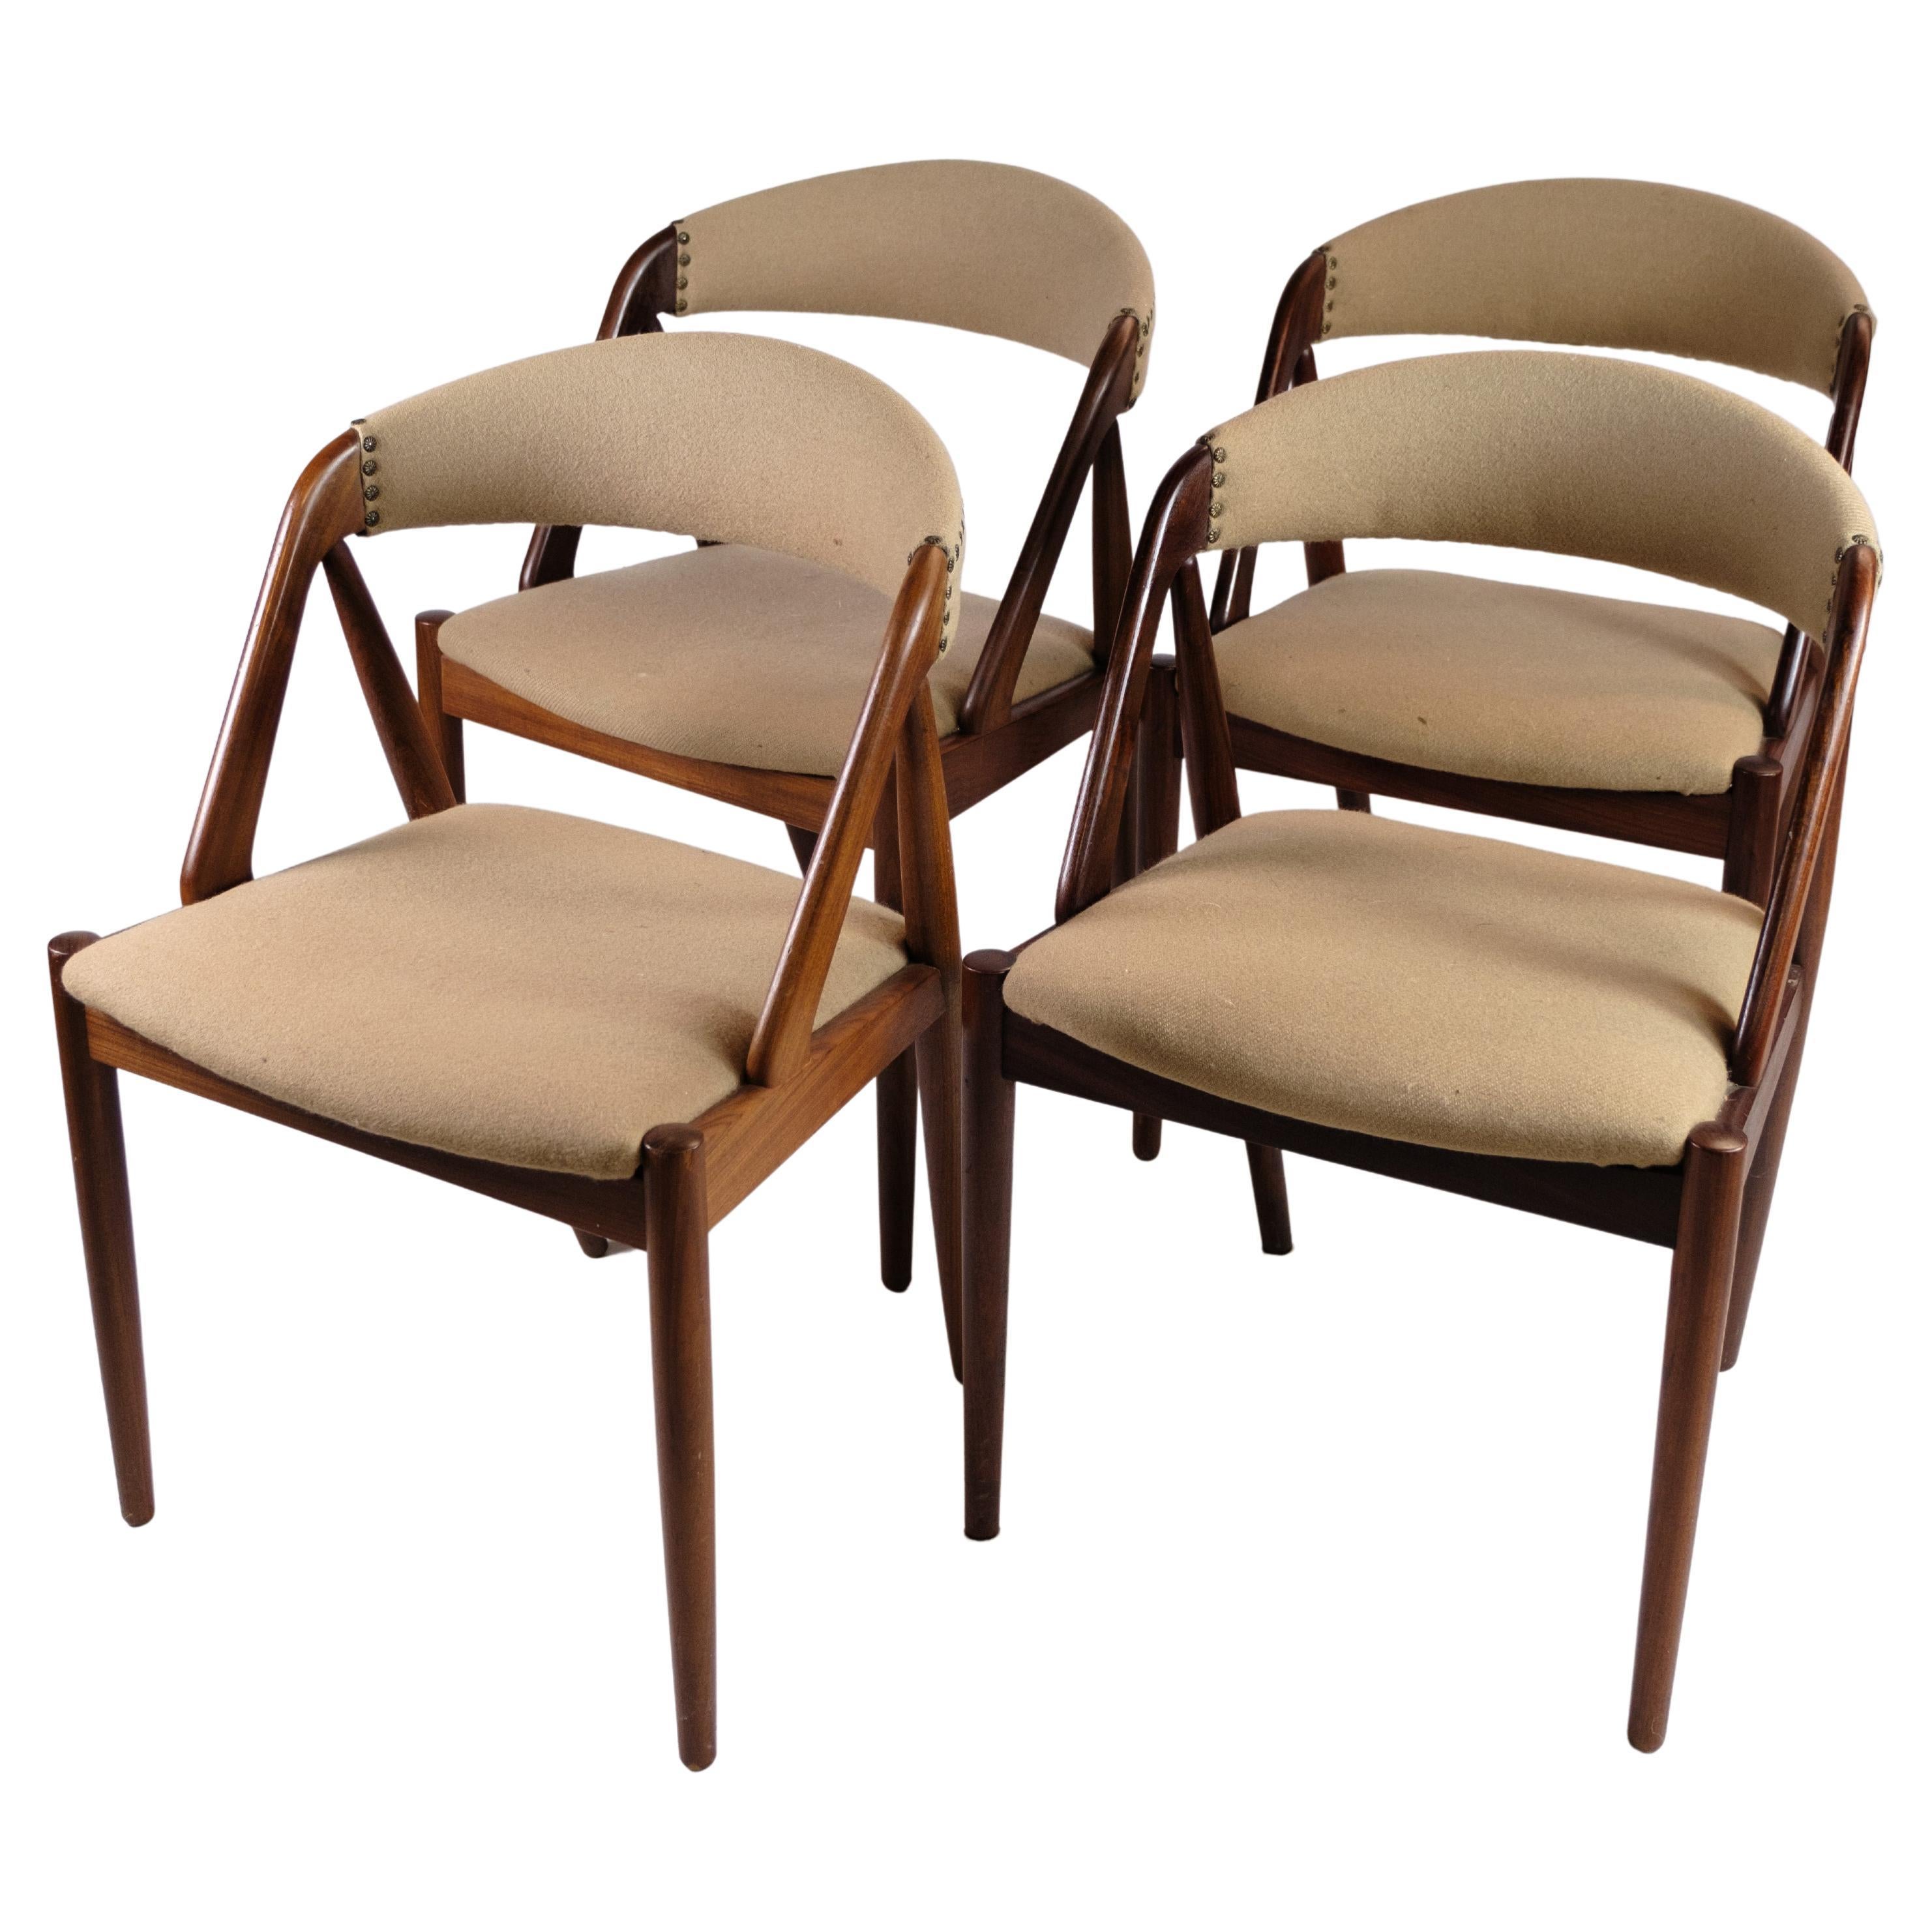 4 Dining Room Chairs, Model 31, Kai Kristiansen